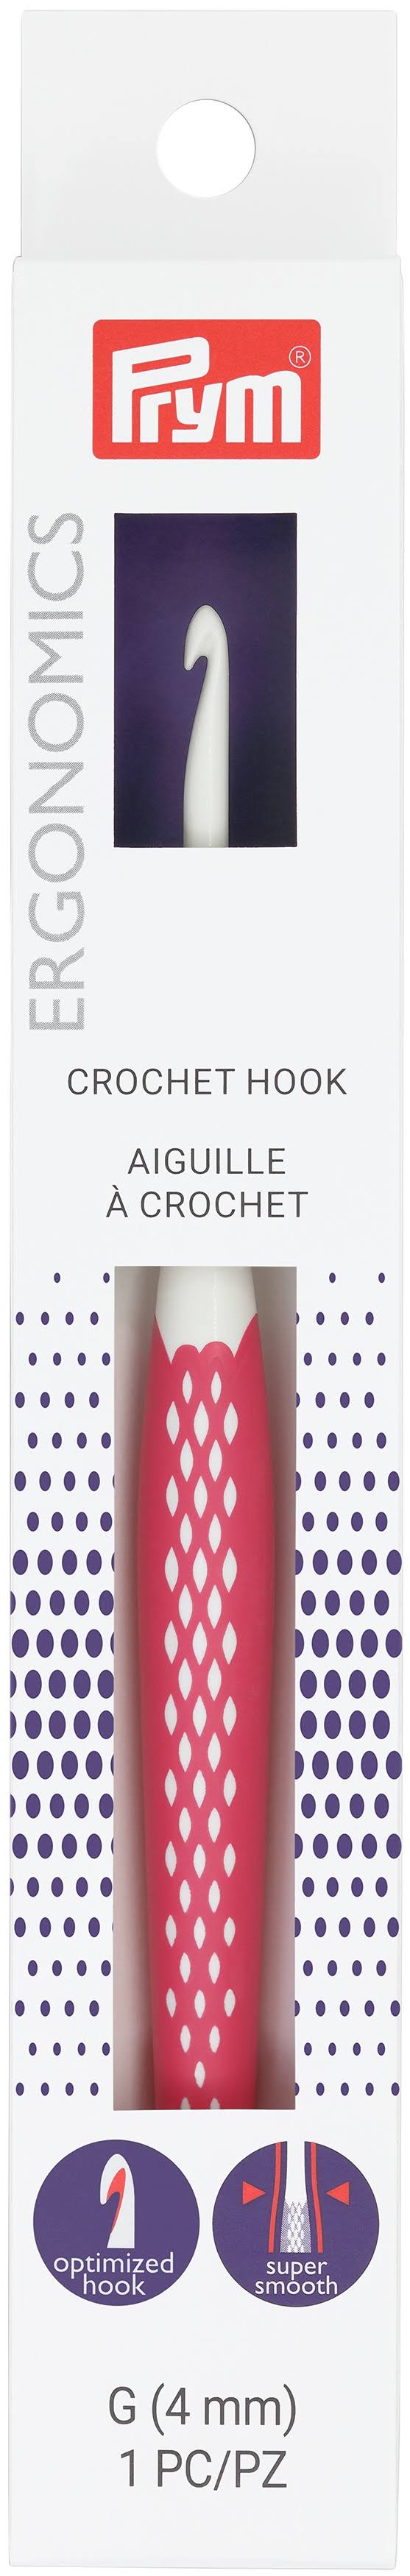 Prym Crochet Hook Size G6/4mm